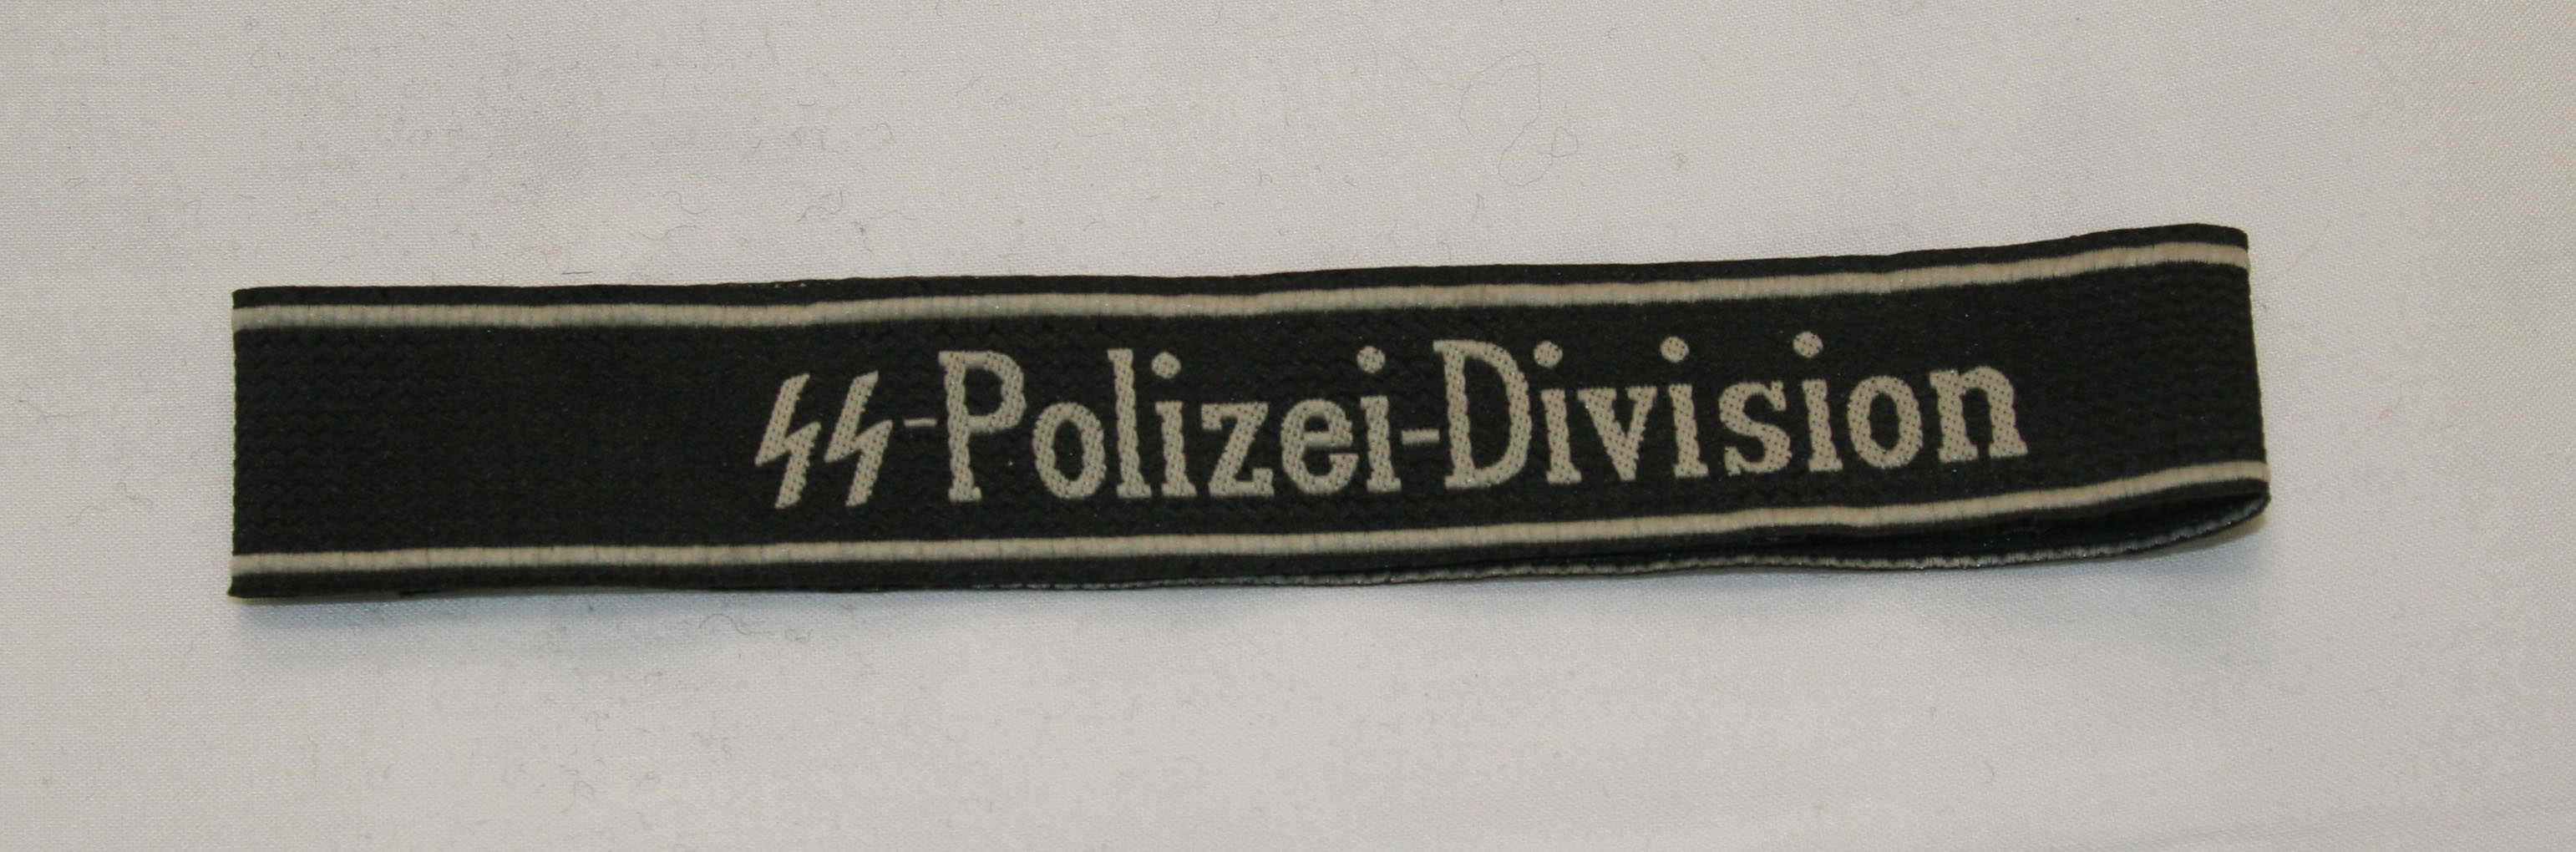 Waffen SS Divisional Cuff Title, Polizei Bevo